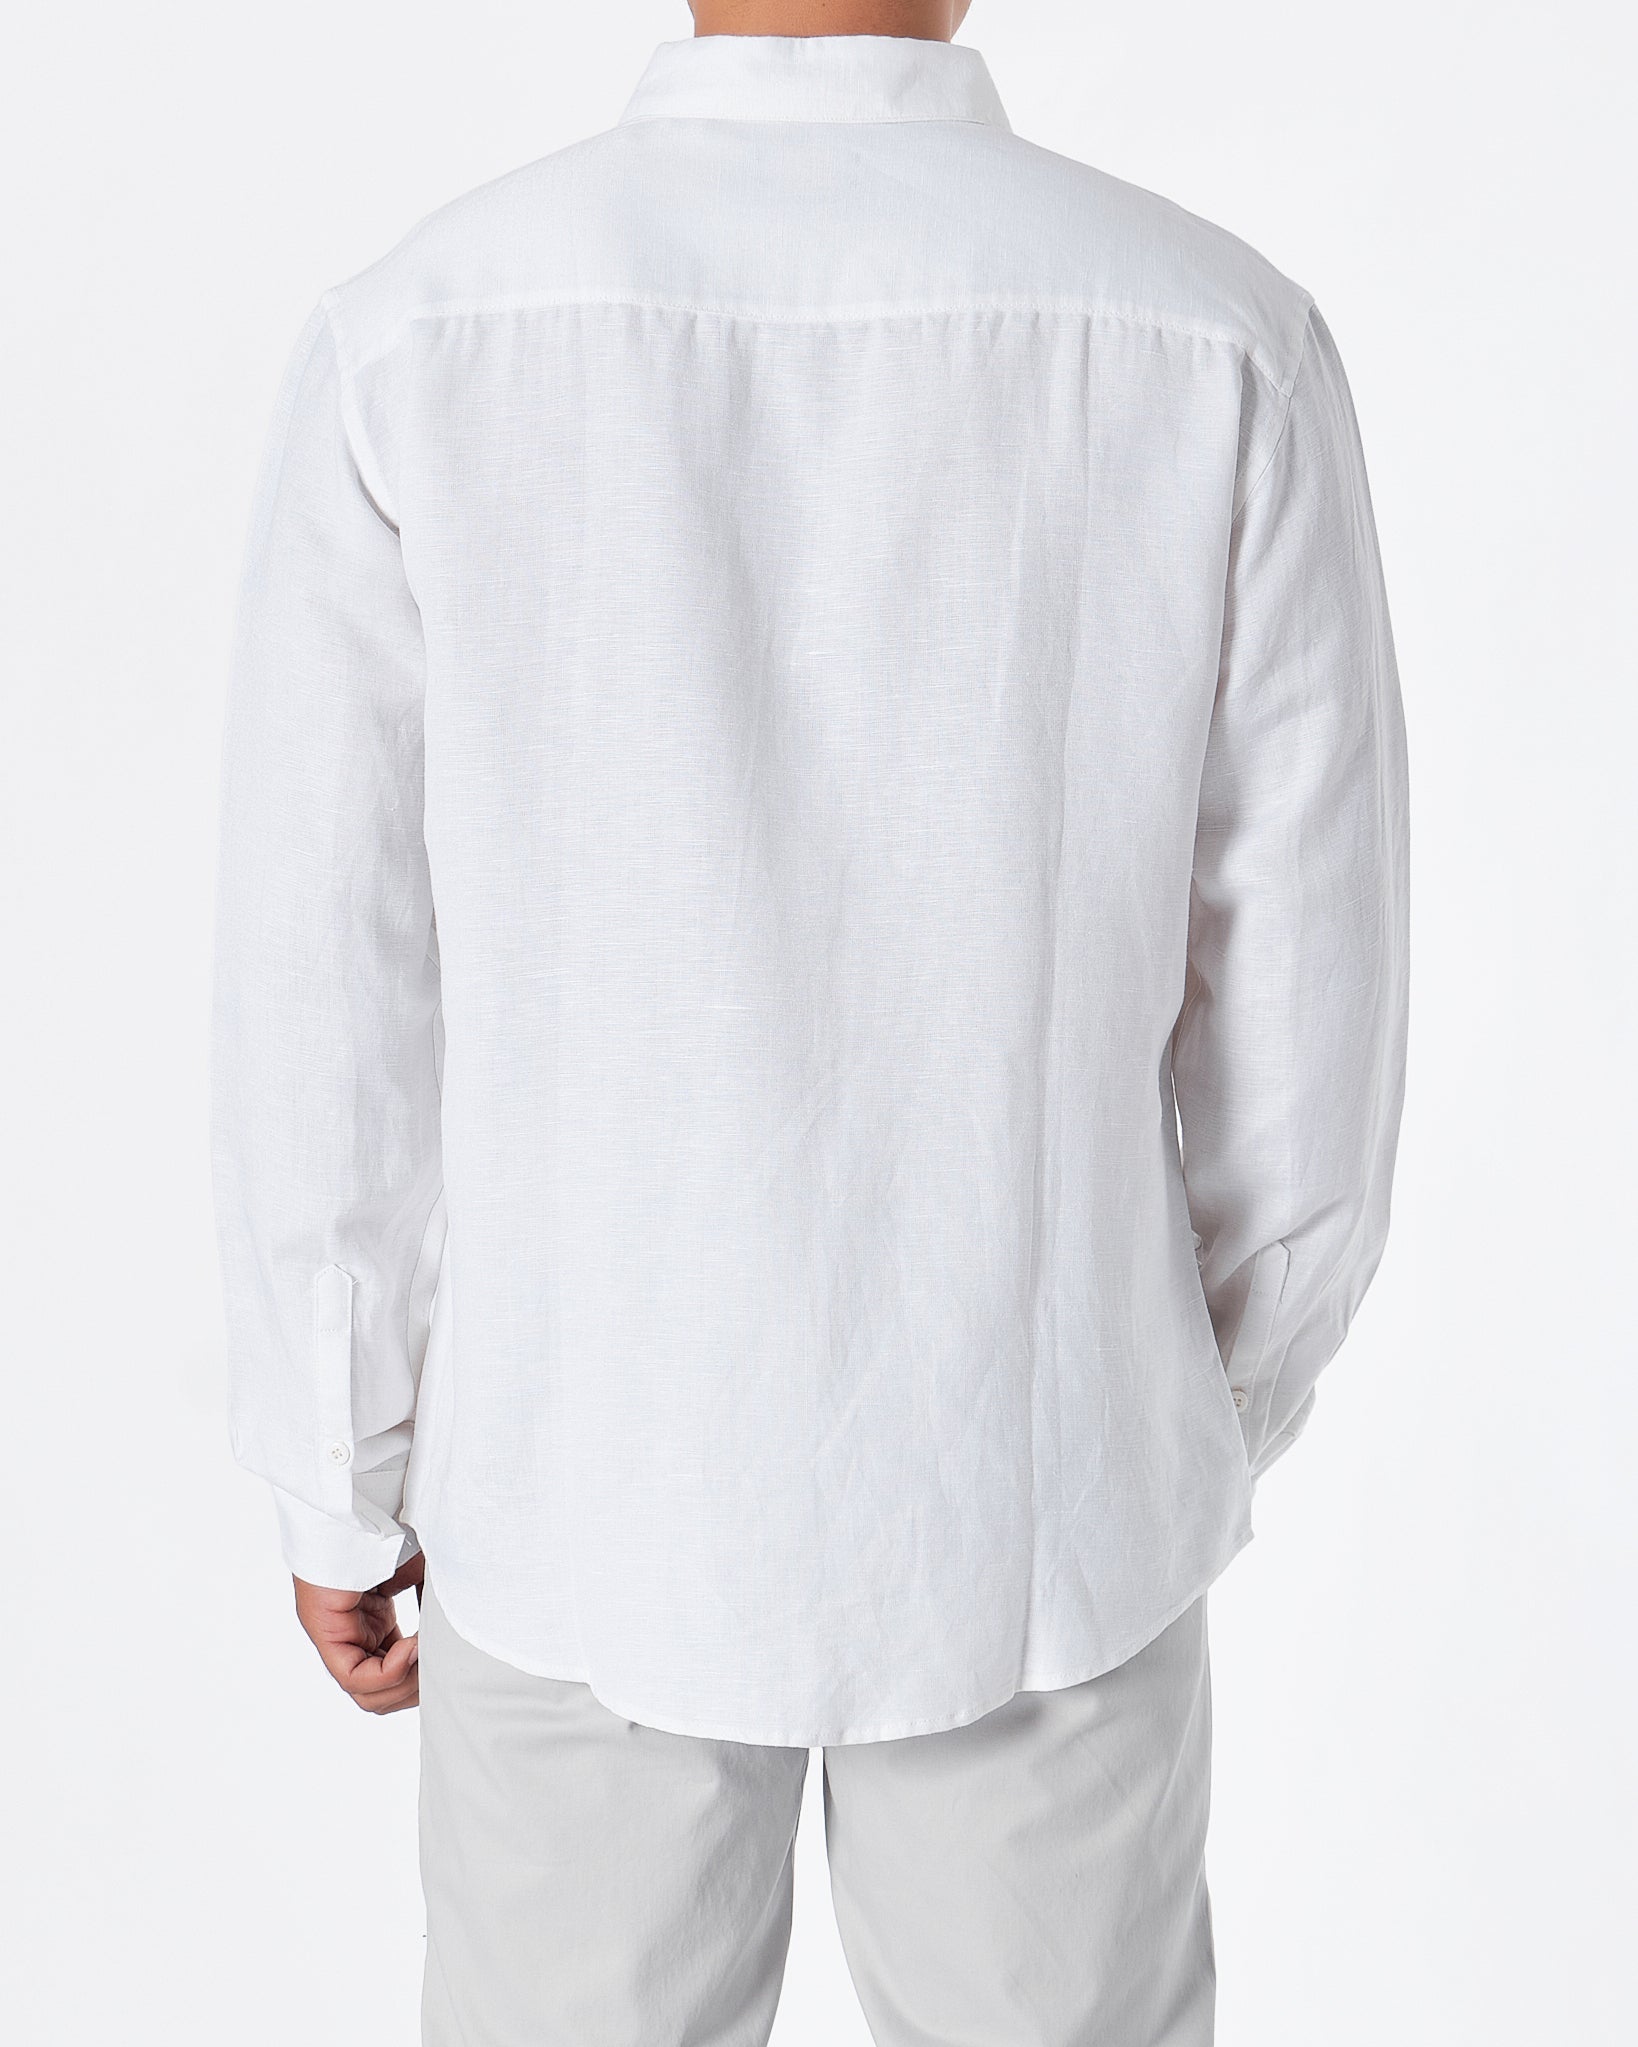 MOI OUTFIT-RL Cotton Men White Shirts Long Sleeve 30.90